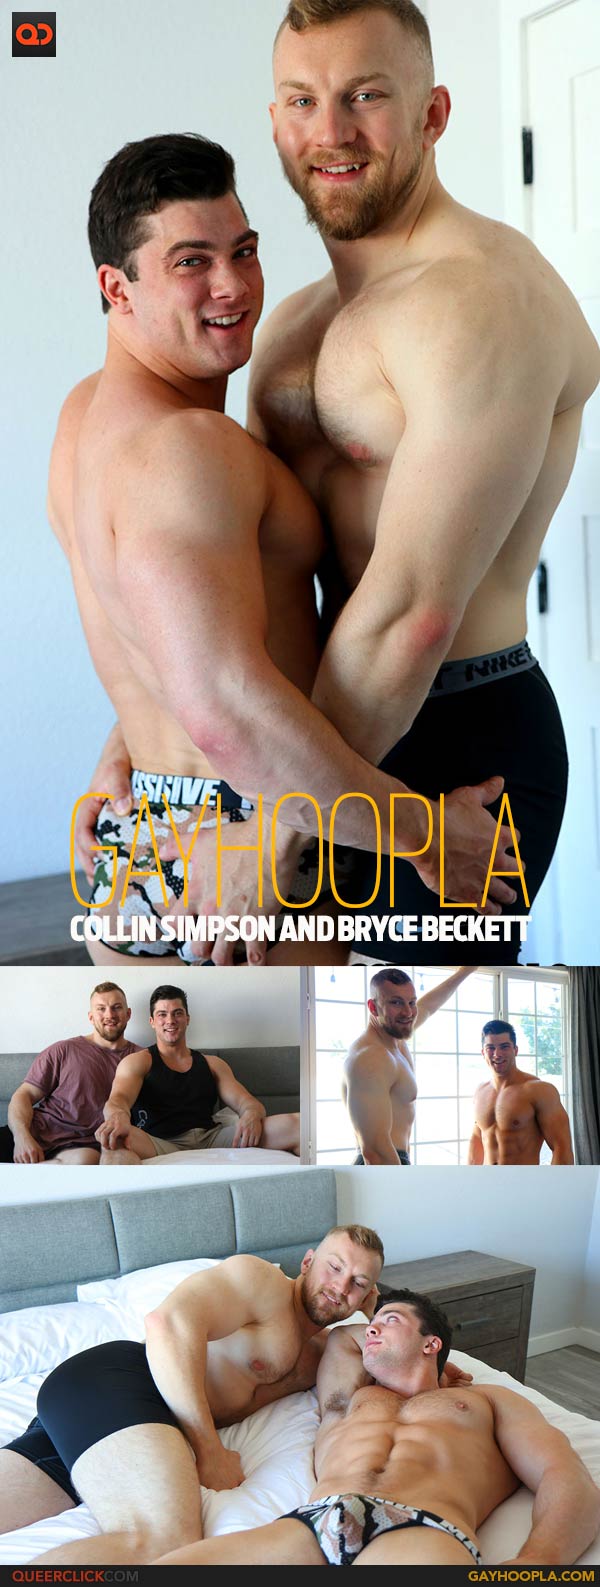 GayHoopla: Collin Simpson and Bryce Beckett